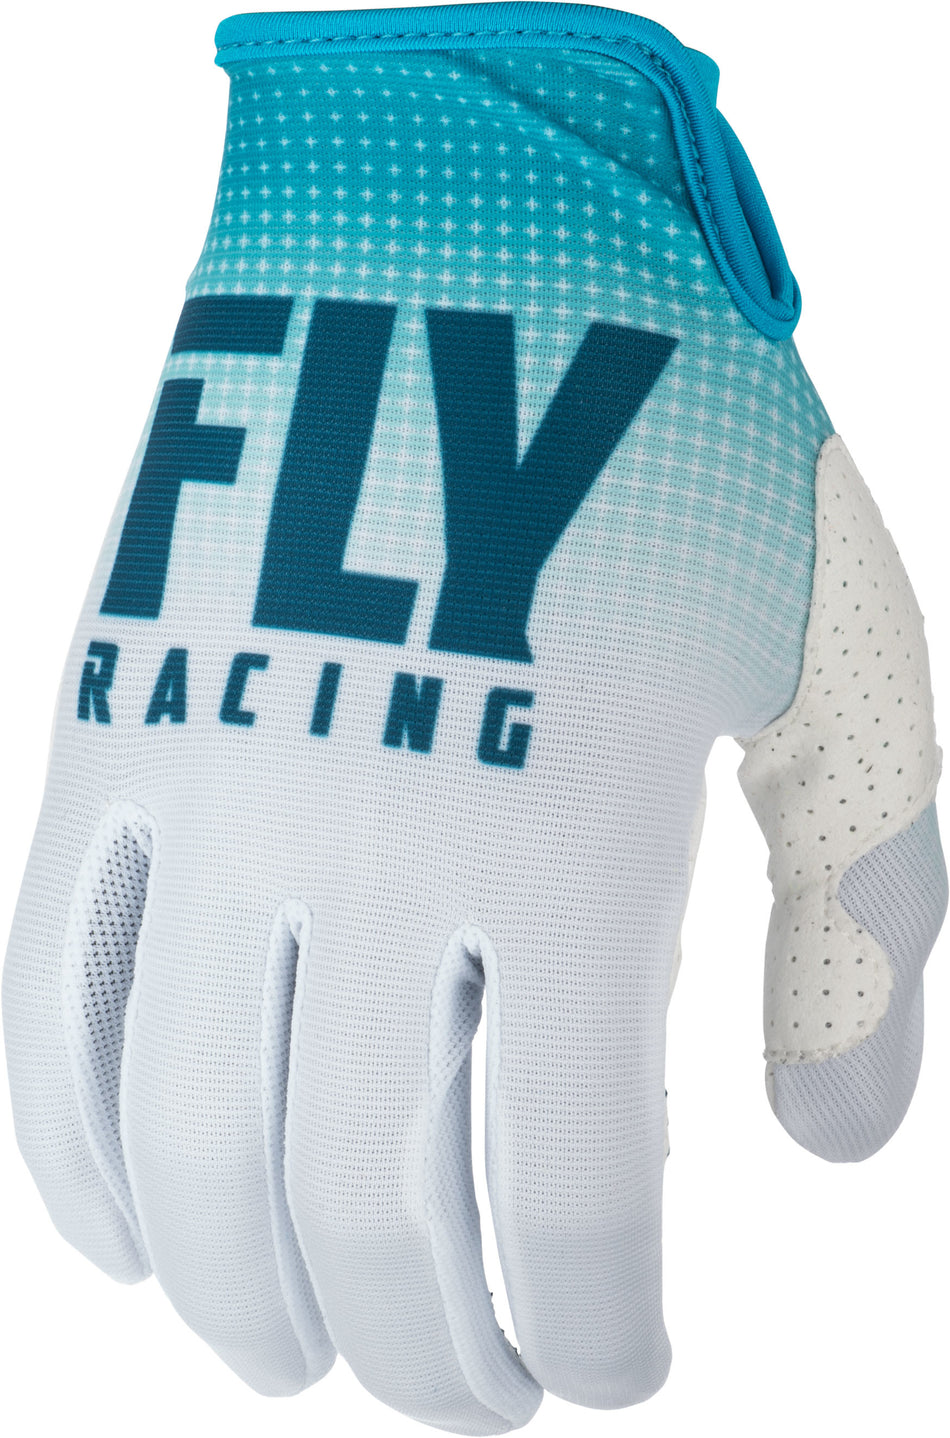 FLY RACING Lite Gloves Blue/White Sz 07 372-01107